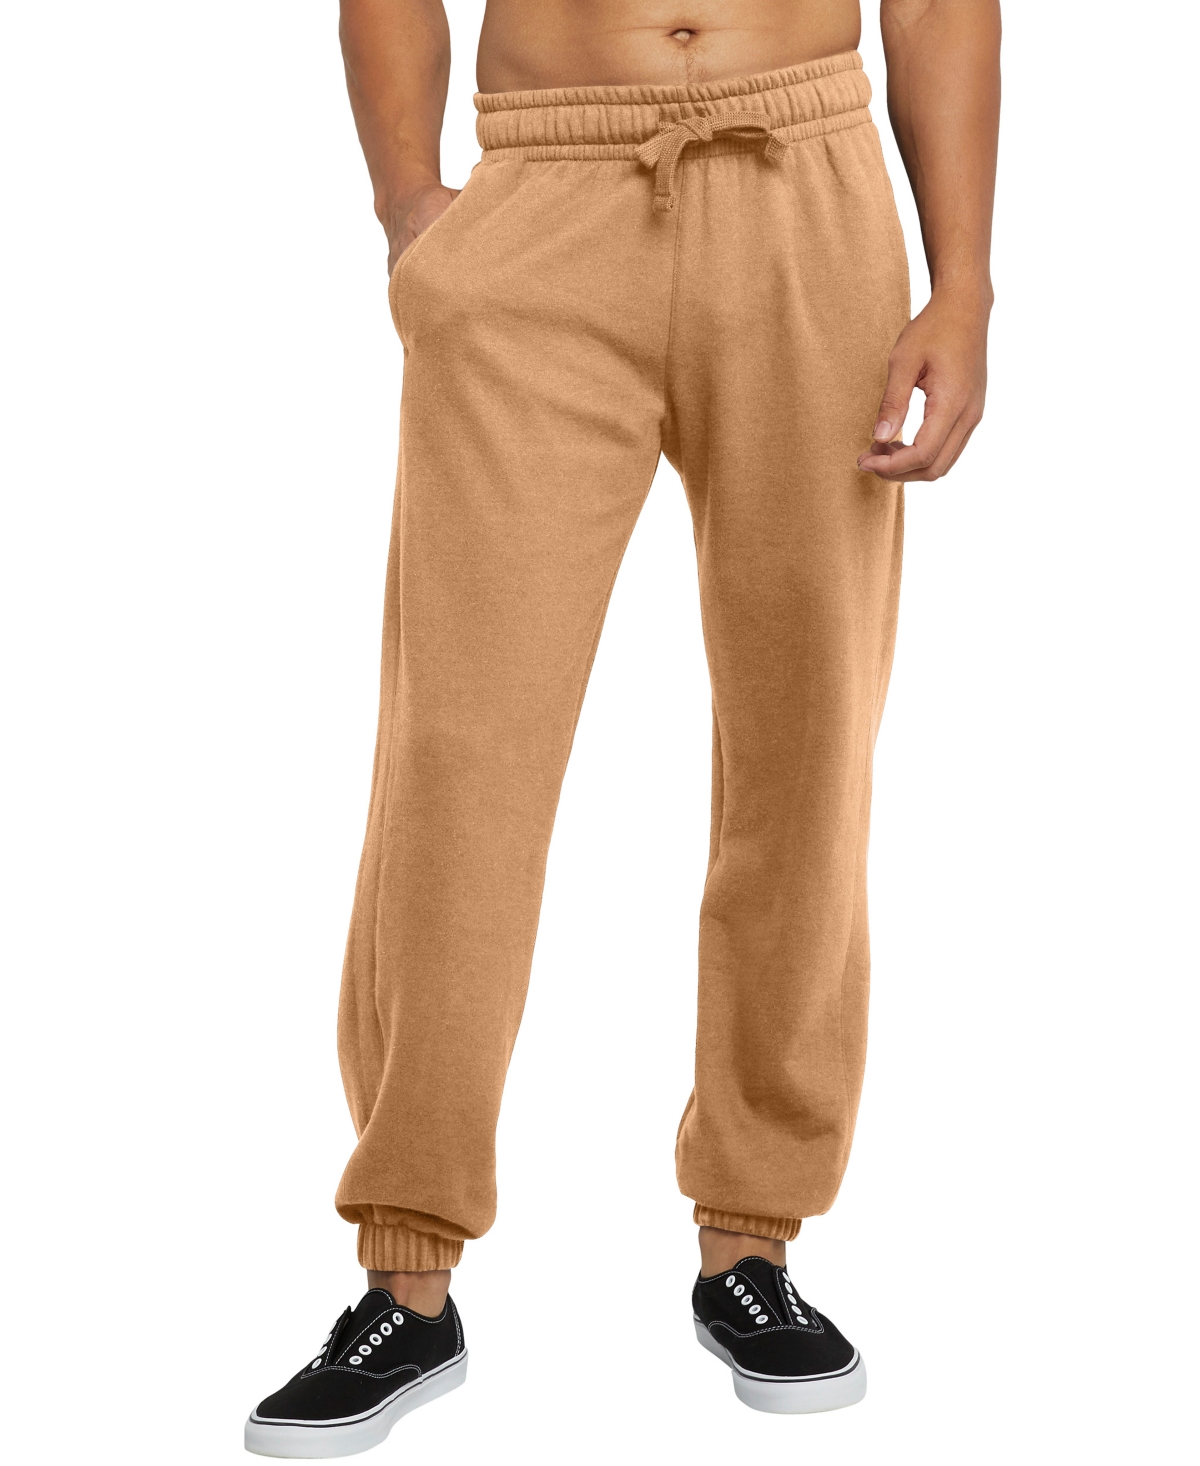 Men's Hanes Originals Fleece Jogger with Pockets Sweatpants - Brown